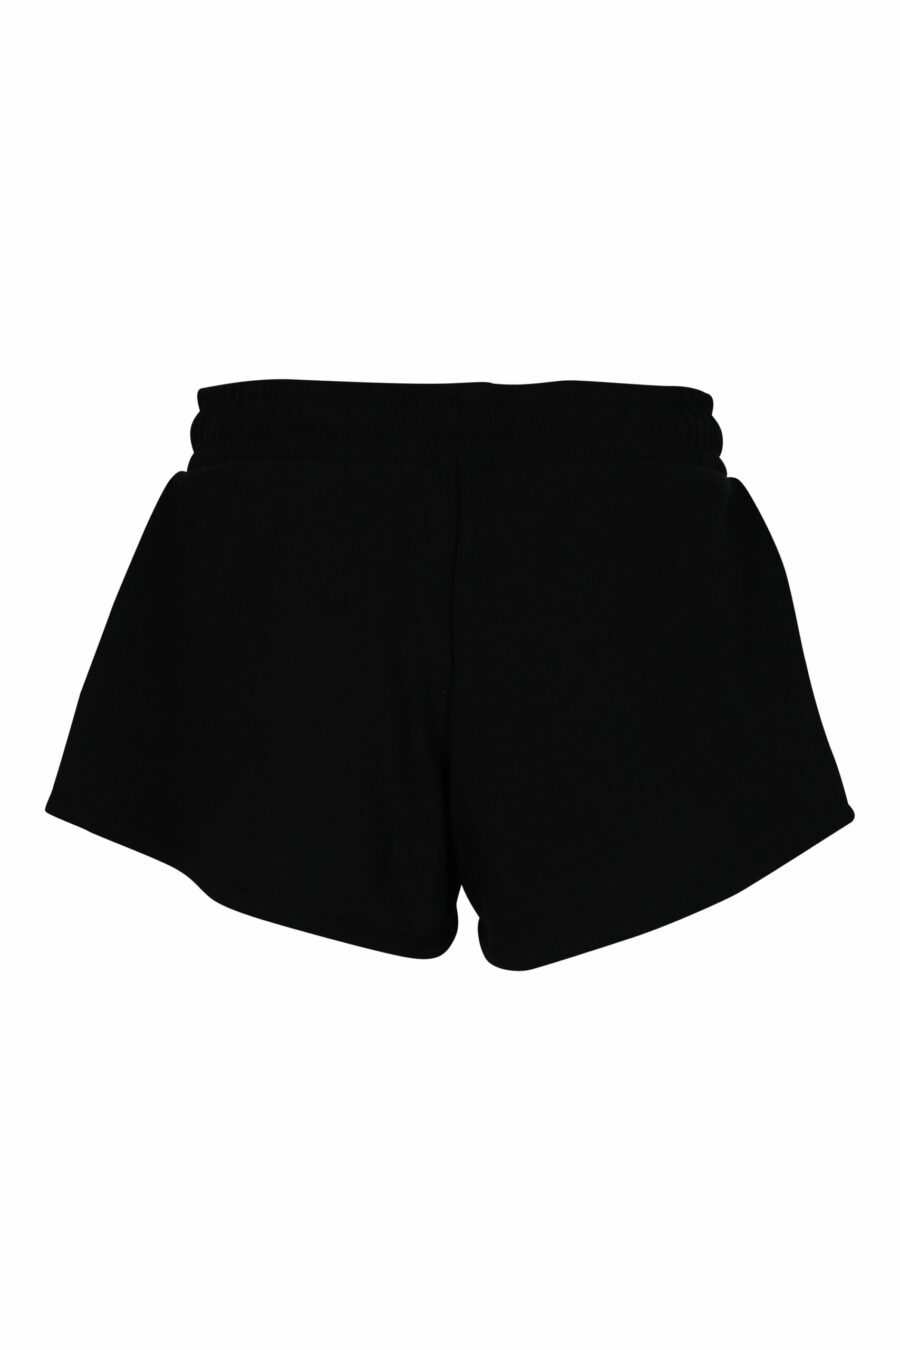 Shorts negros con minilogo multicolor - 667113355924 1 scaled